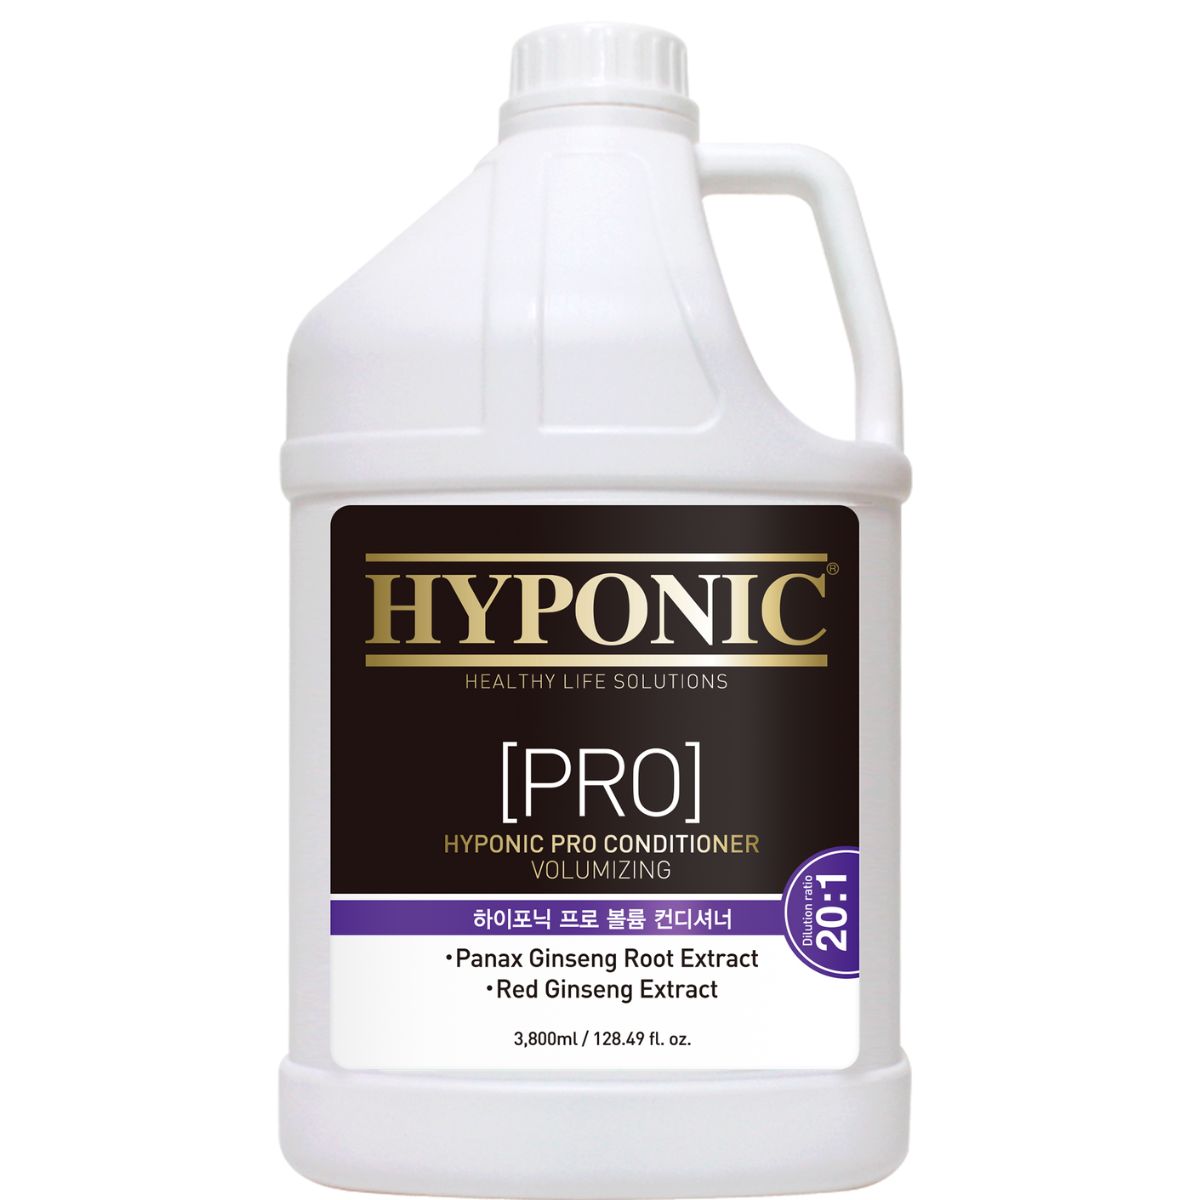 Hyponic Pro Conditioner, Volumizing